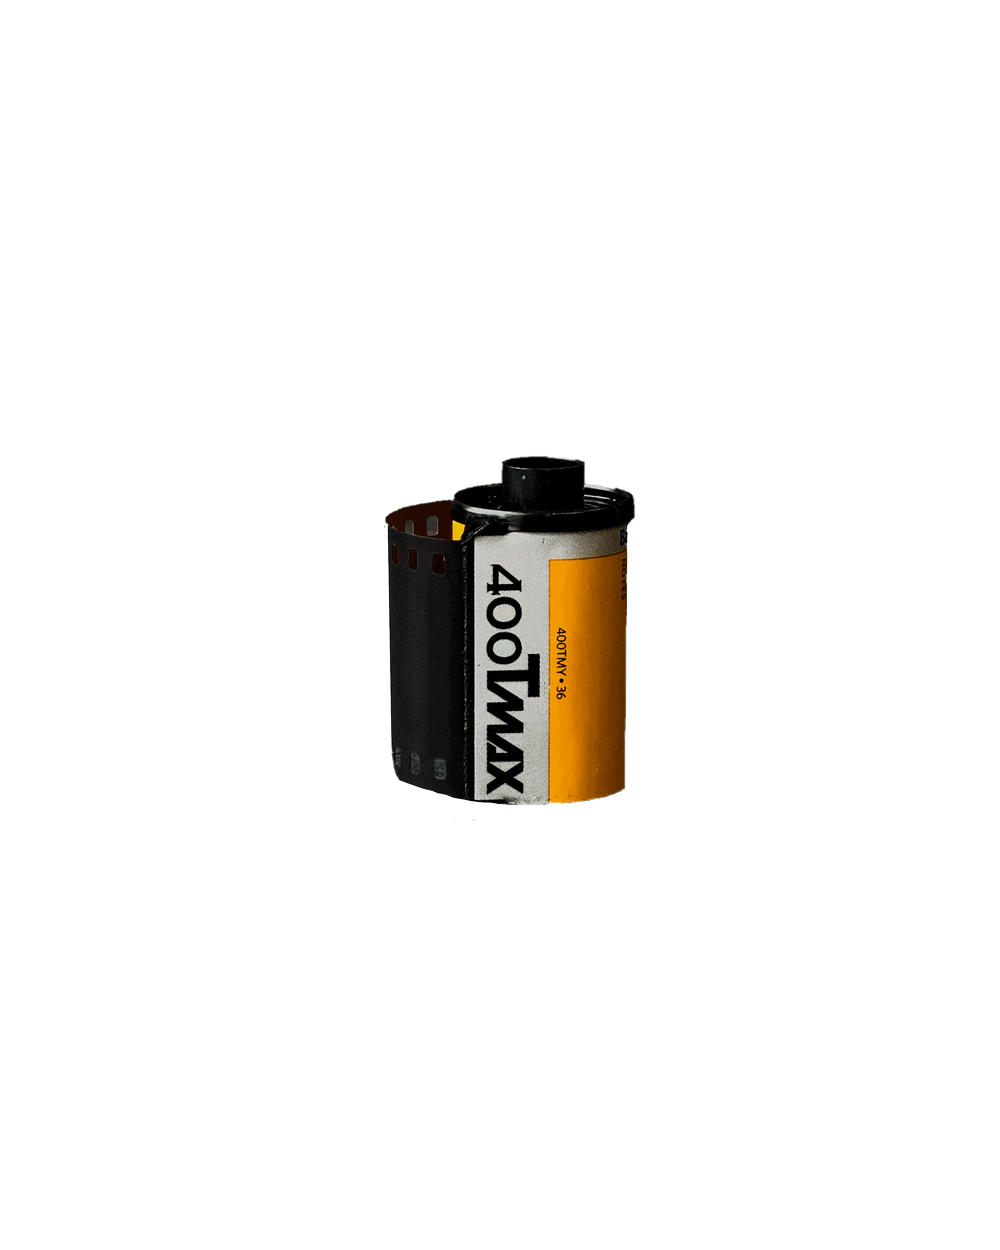 Midwest Photo Kodak Professional T-MAX 400 Black & White Negative